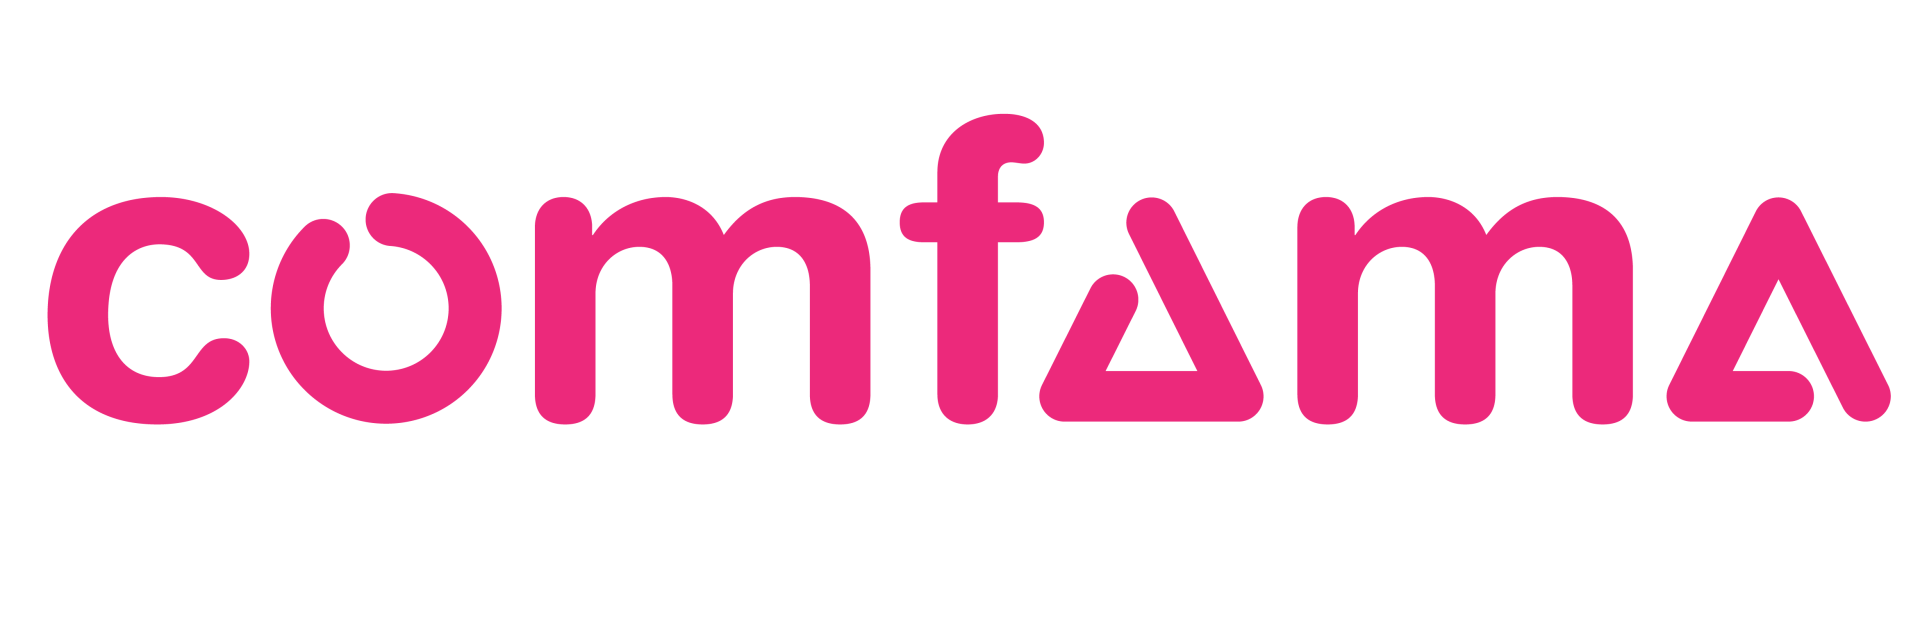 Logo ComfamaPro